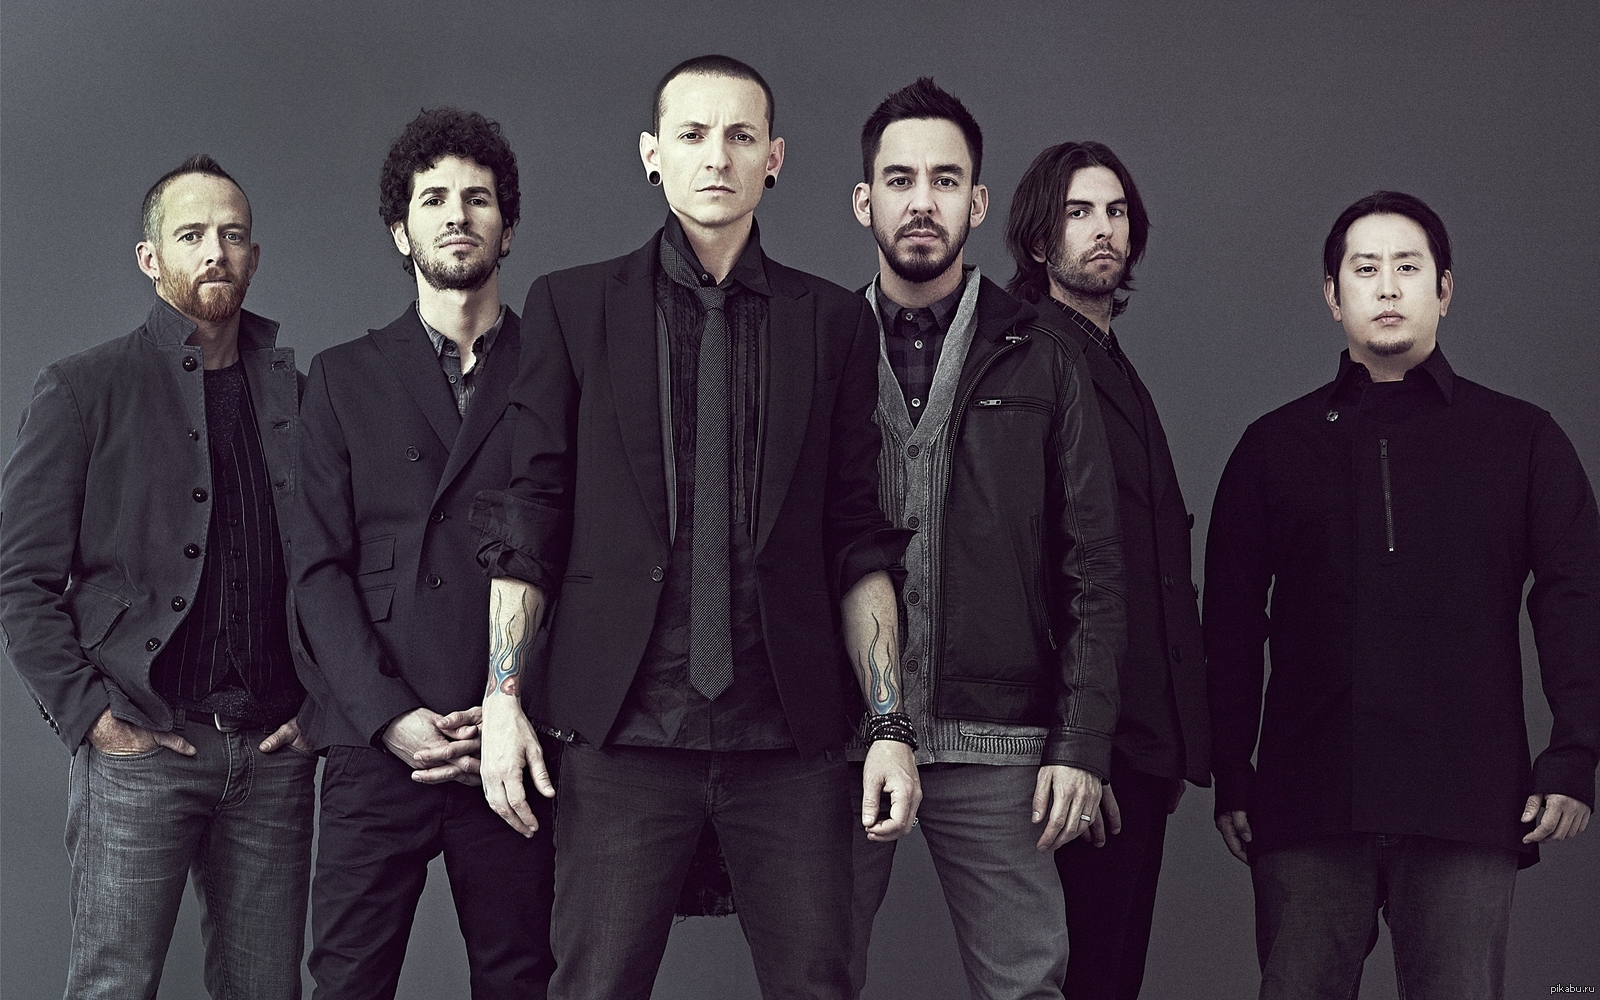  ,    . Linkin Park   ) http://lenta.ru/comments/news/2014/02/07/linkin/  , ,      ?      